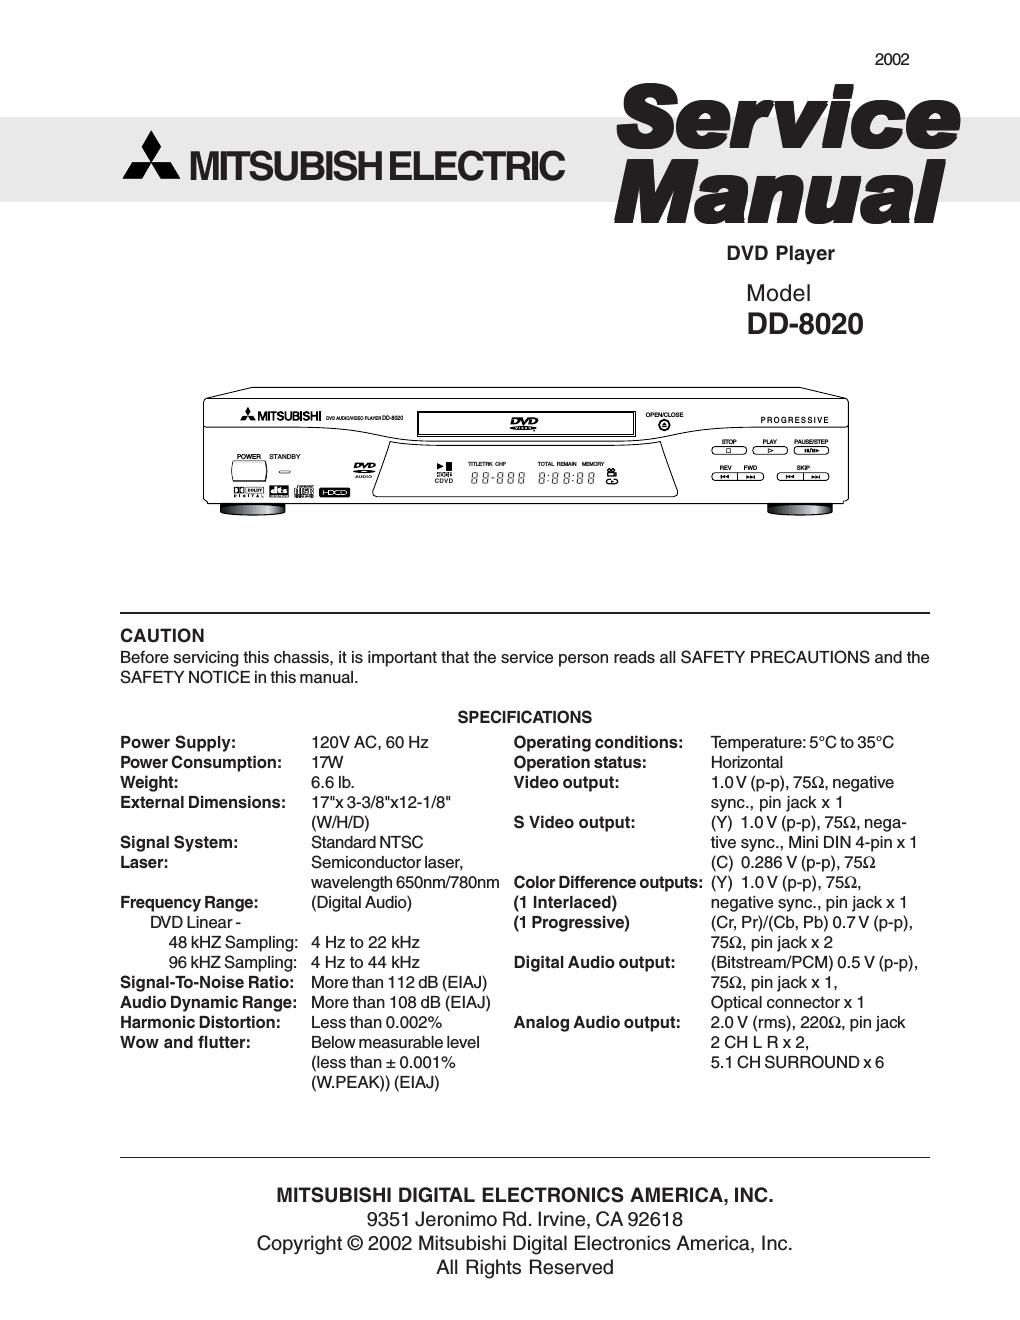 mitsubishi dd 8020 service manual